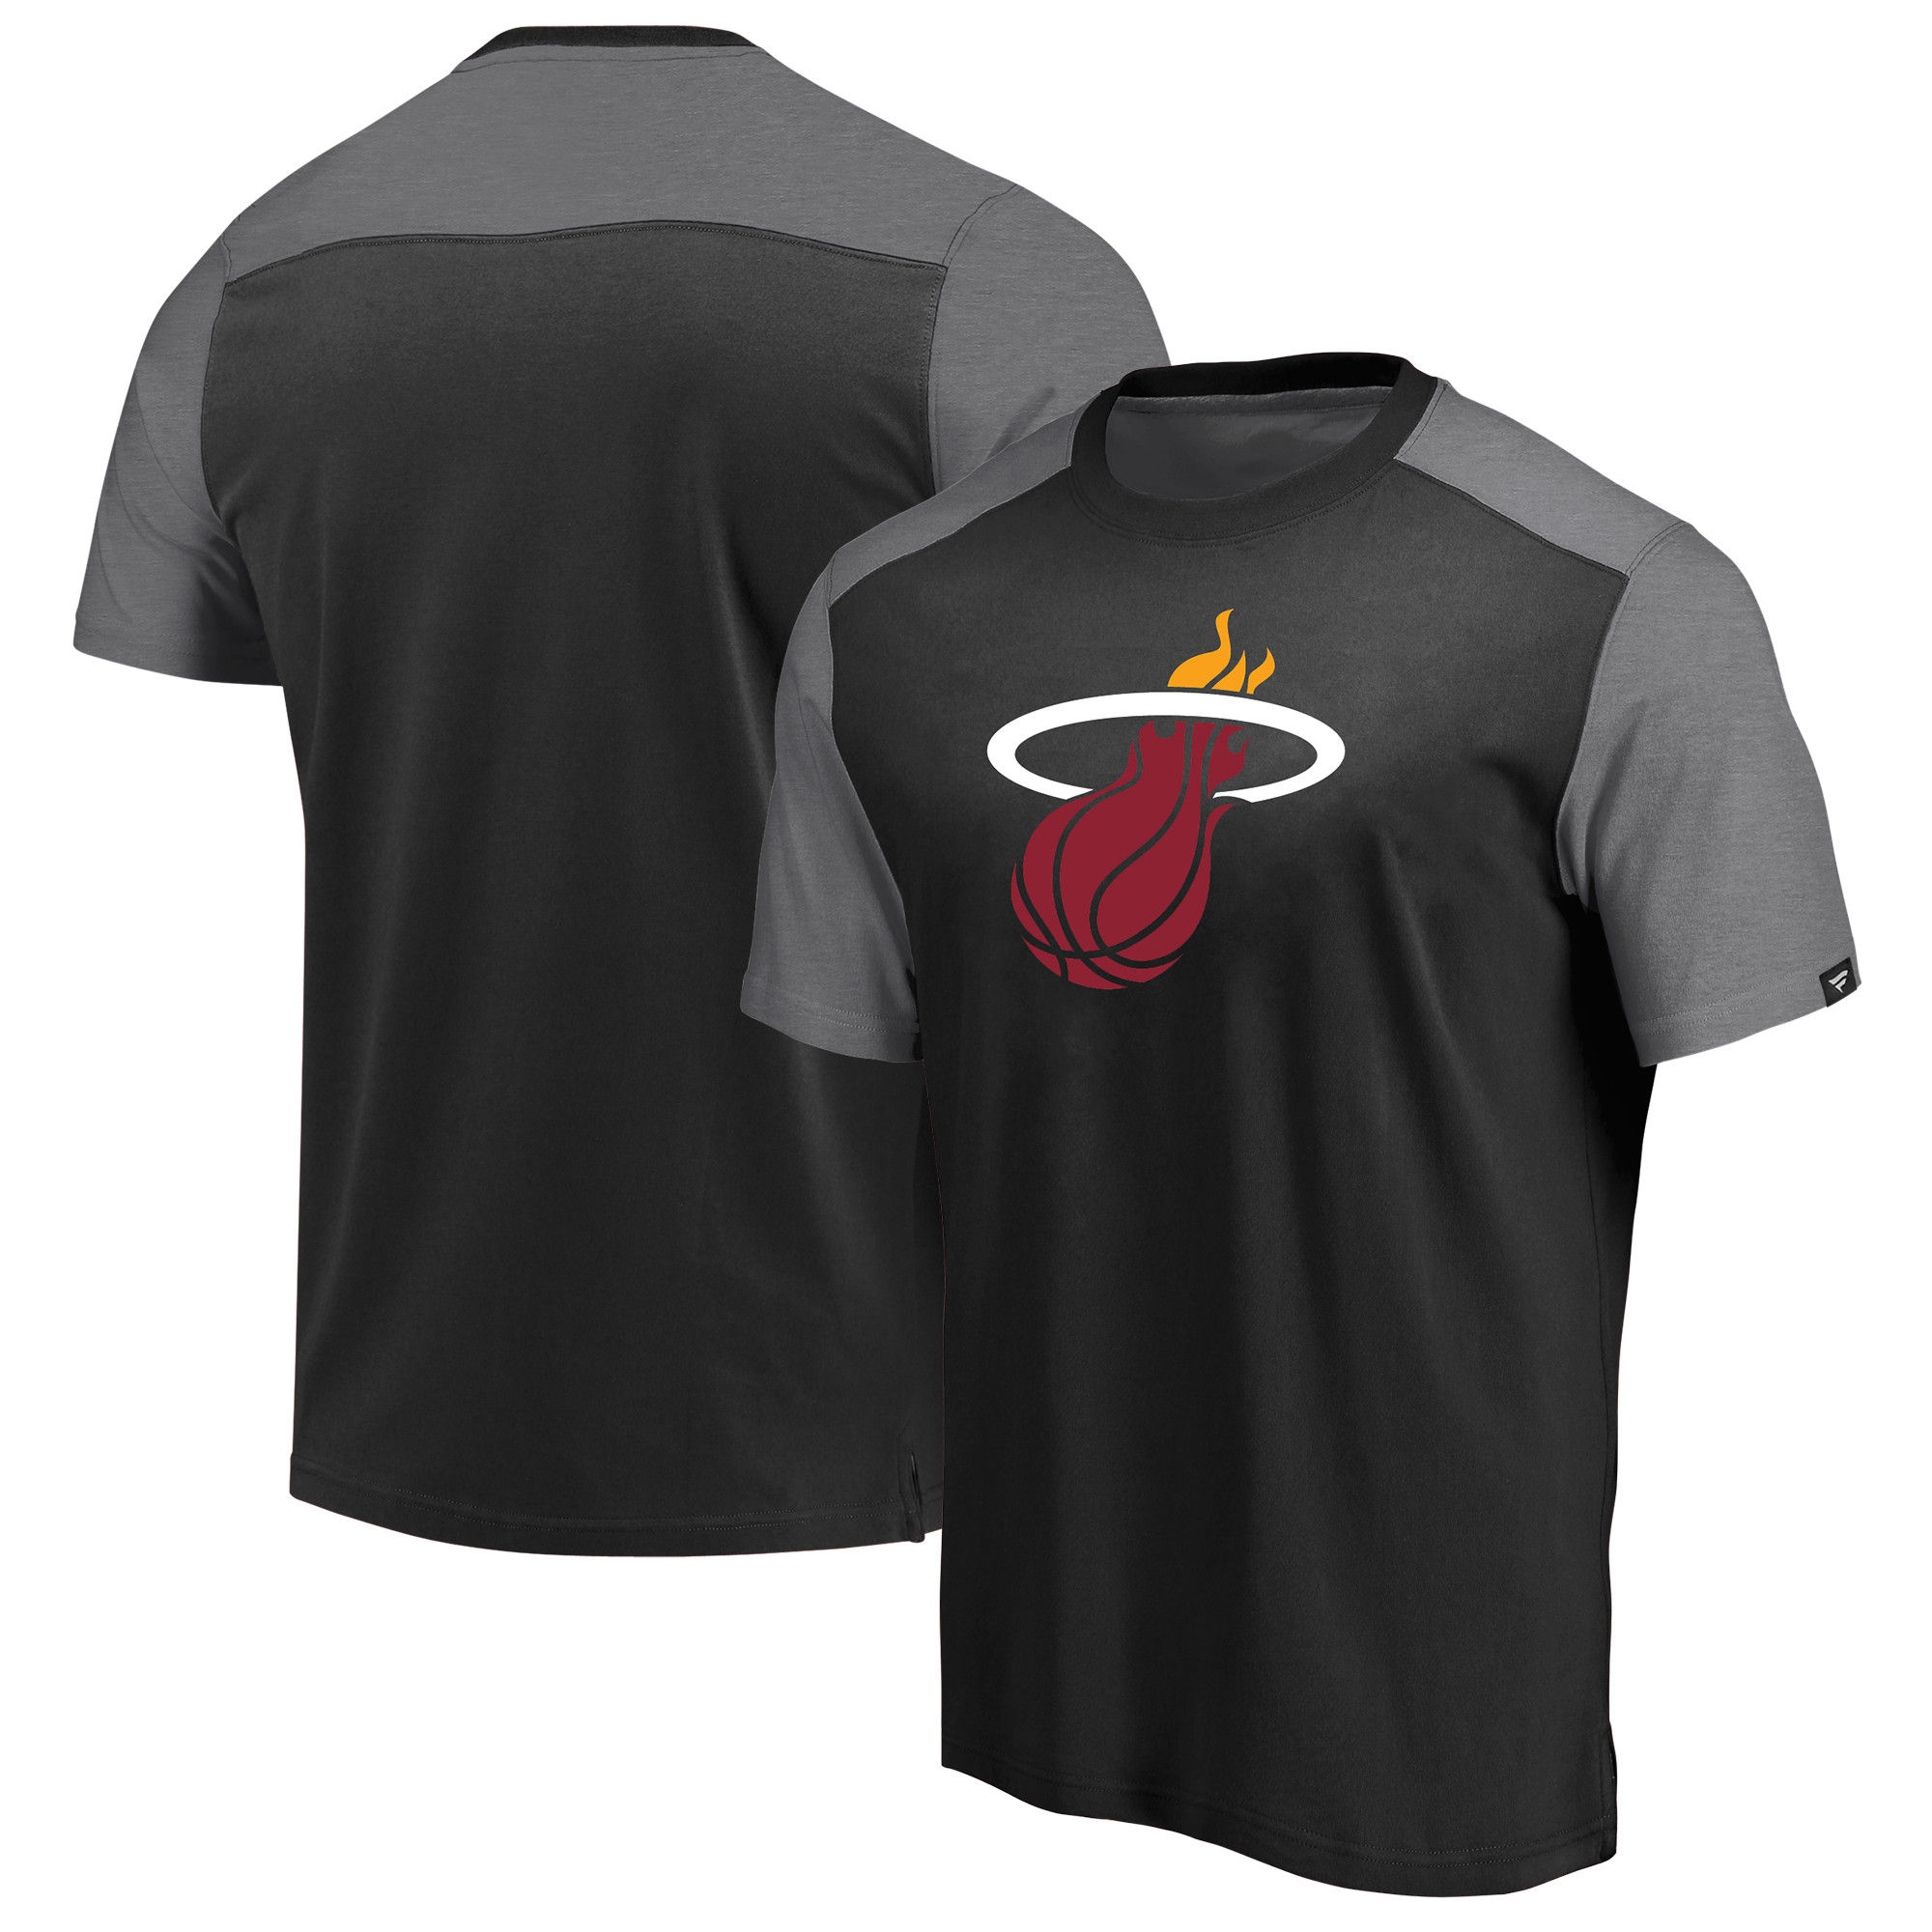 Miami Heat Fanatics Branded Iconic Blocked T-Shirt Black